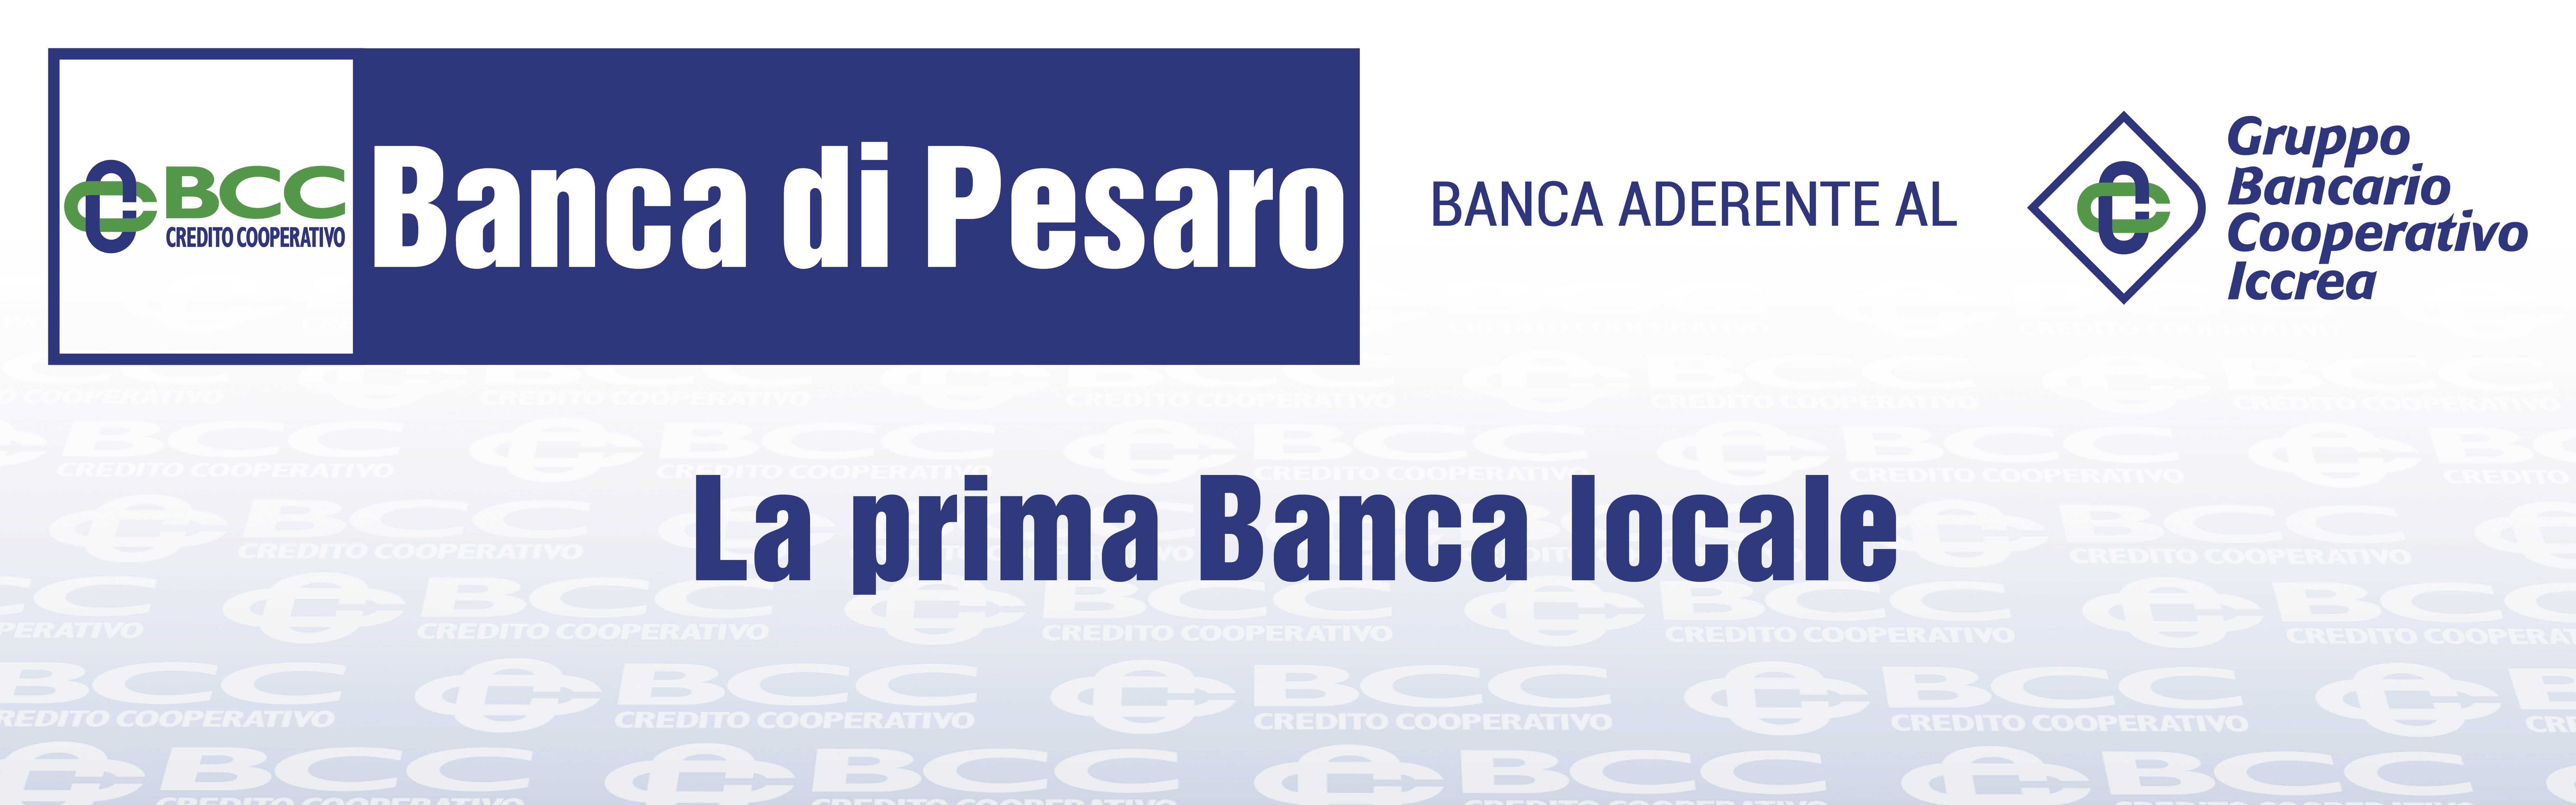 Banca Di Pesaro Credito Cooperativo Linkedin